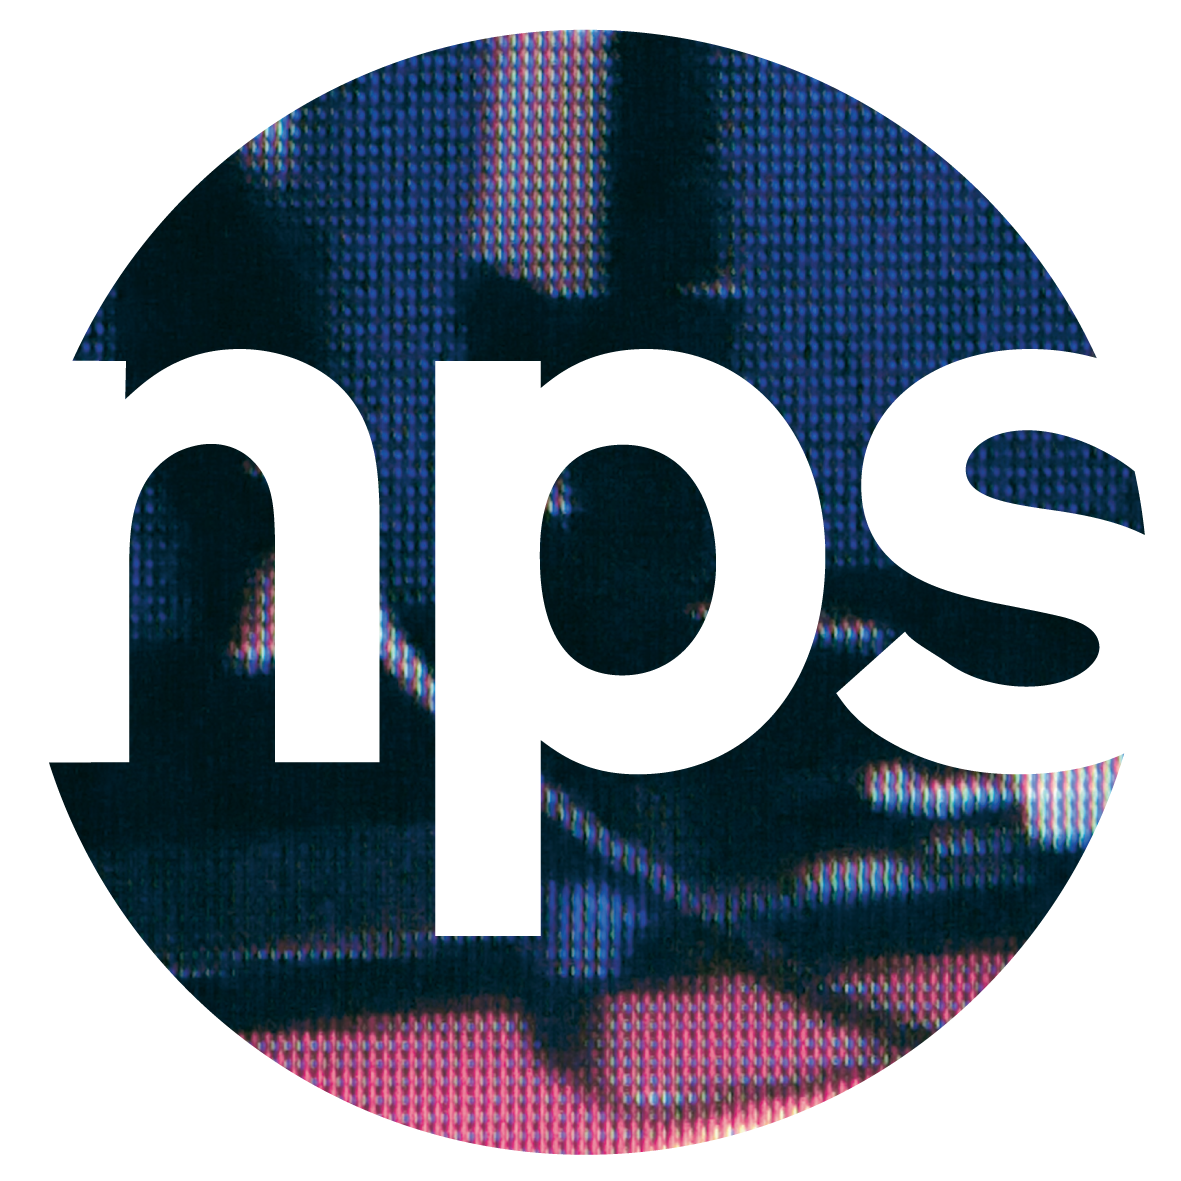 Nps logo Black and White Stock Photos & Images - Alamy